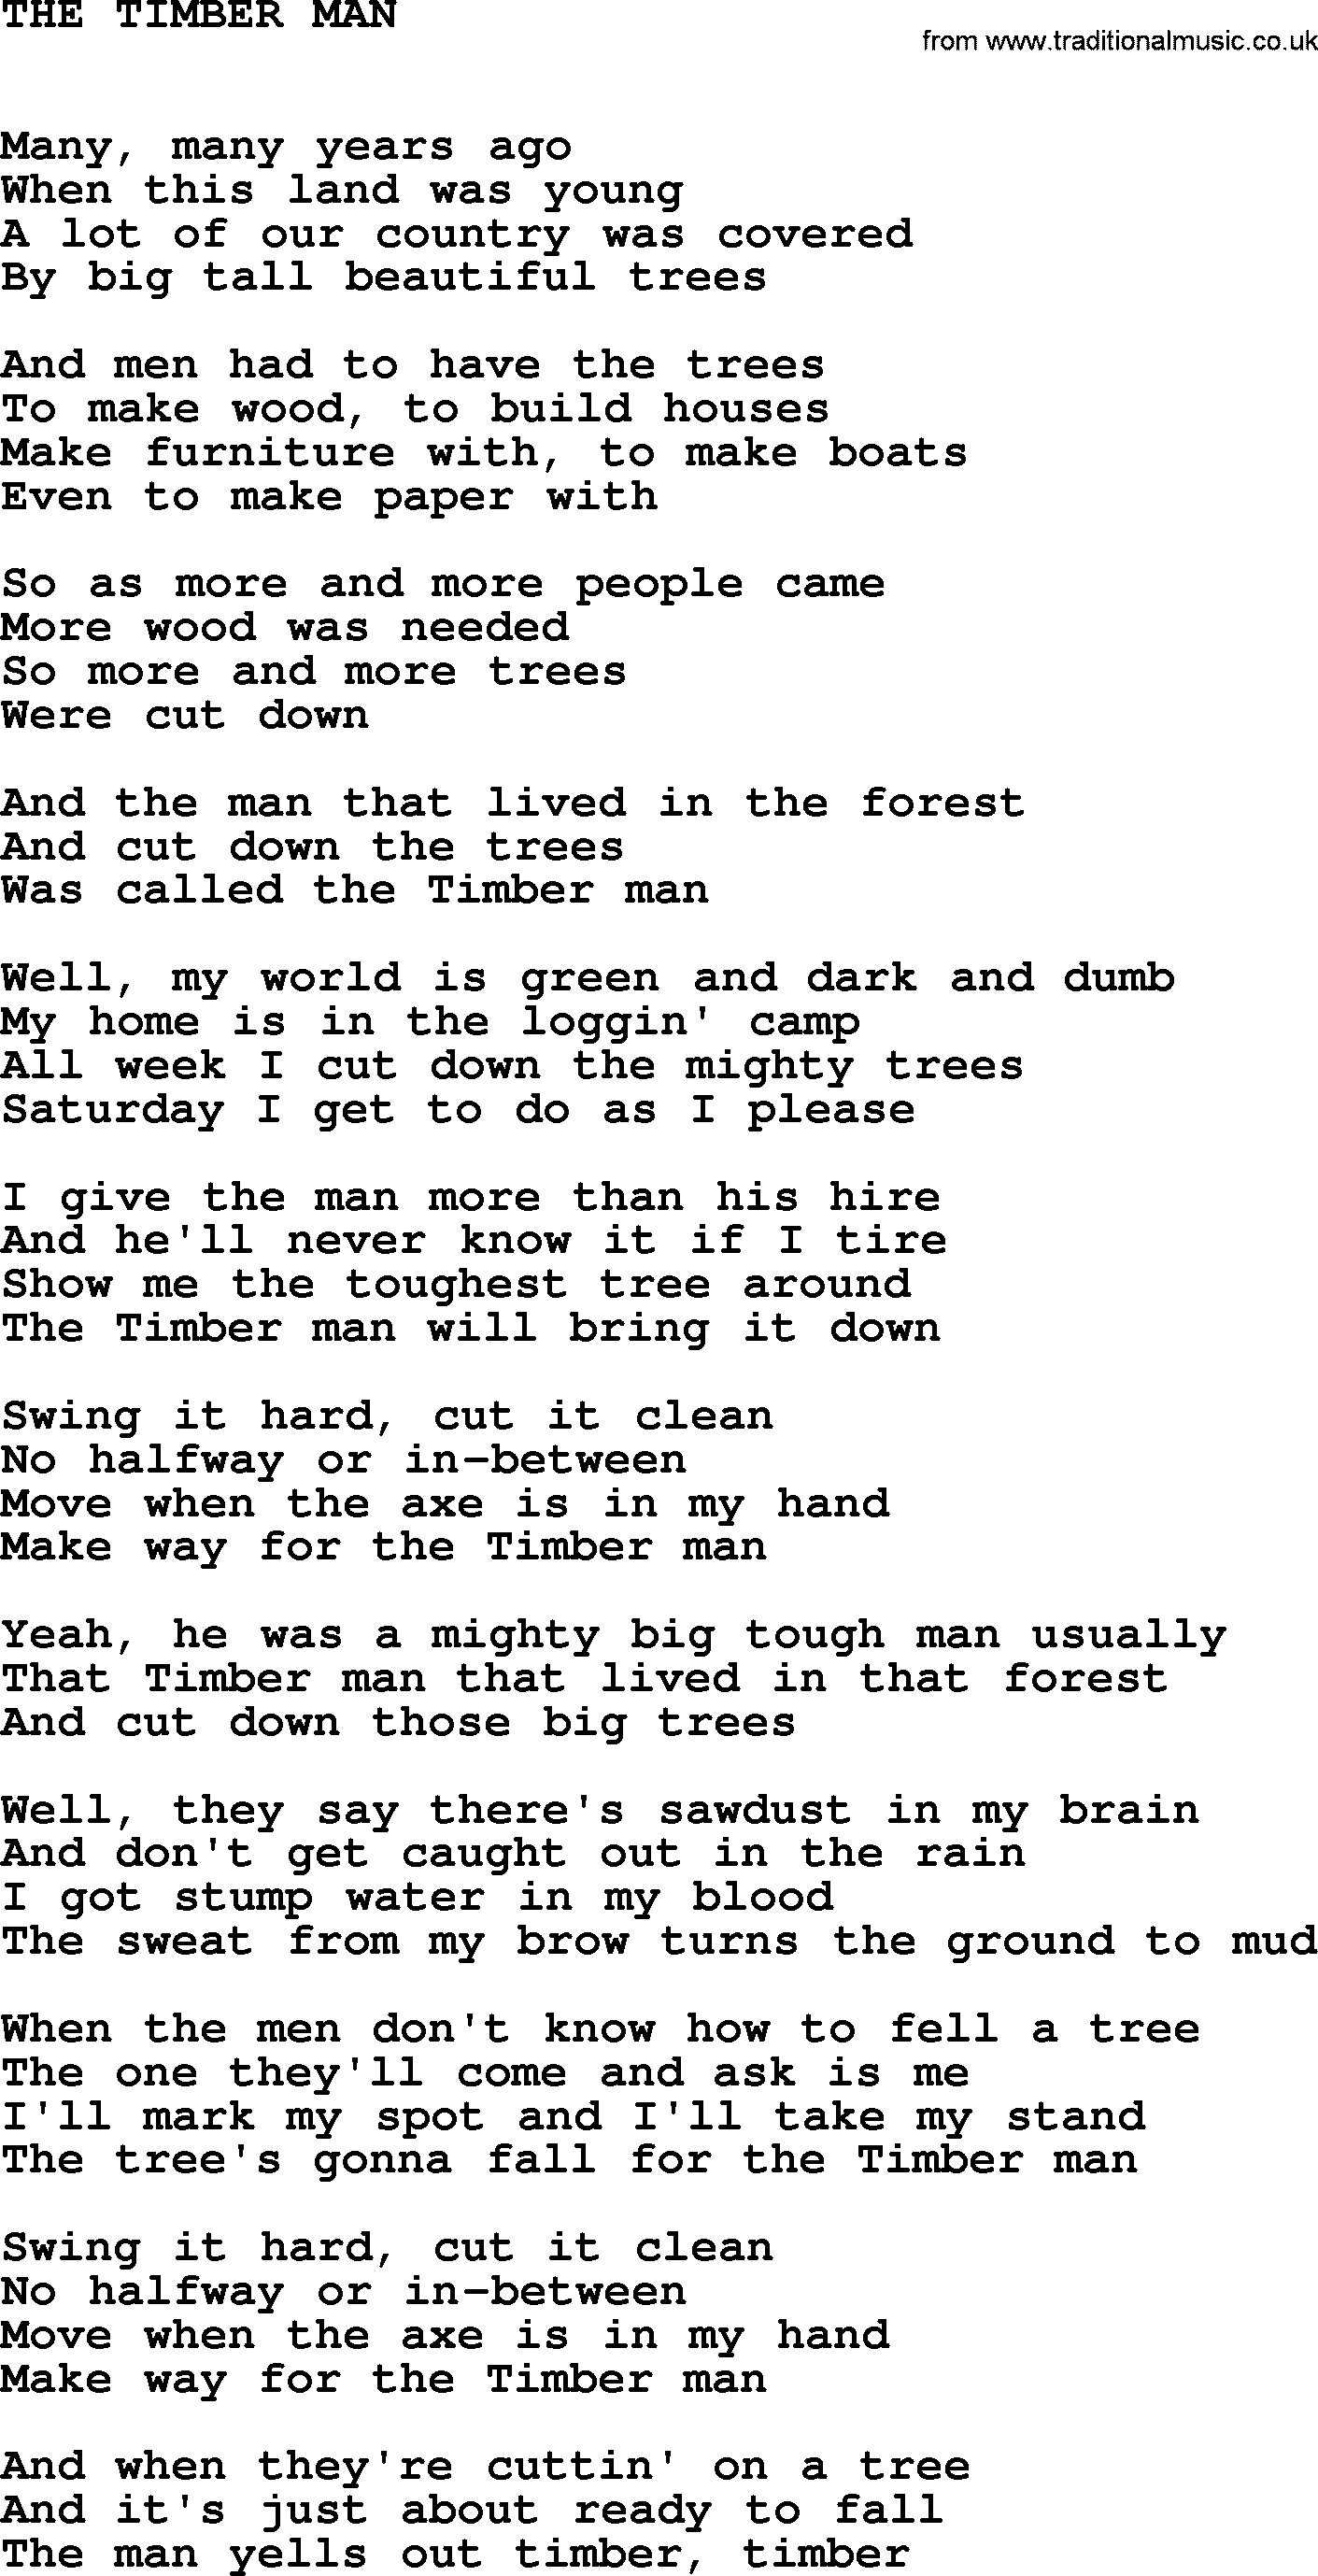 Johnny Cash song The Timber Man.txt lyrics